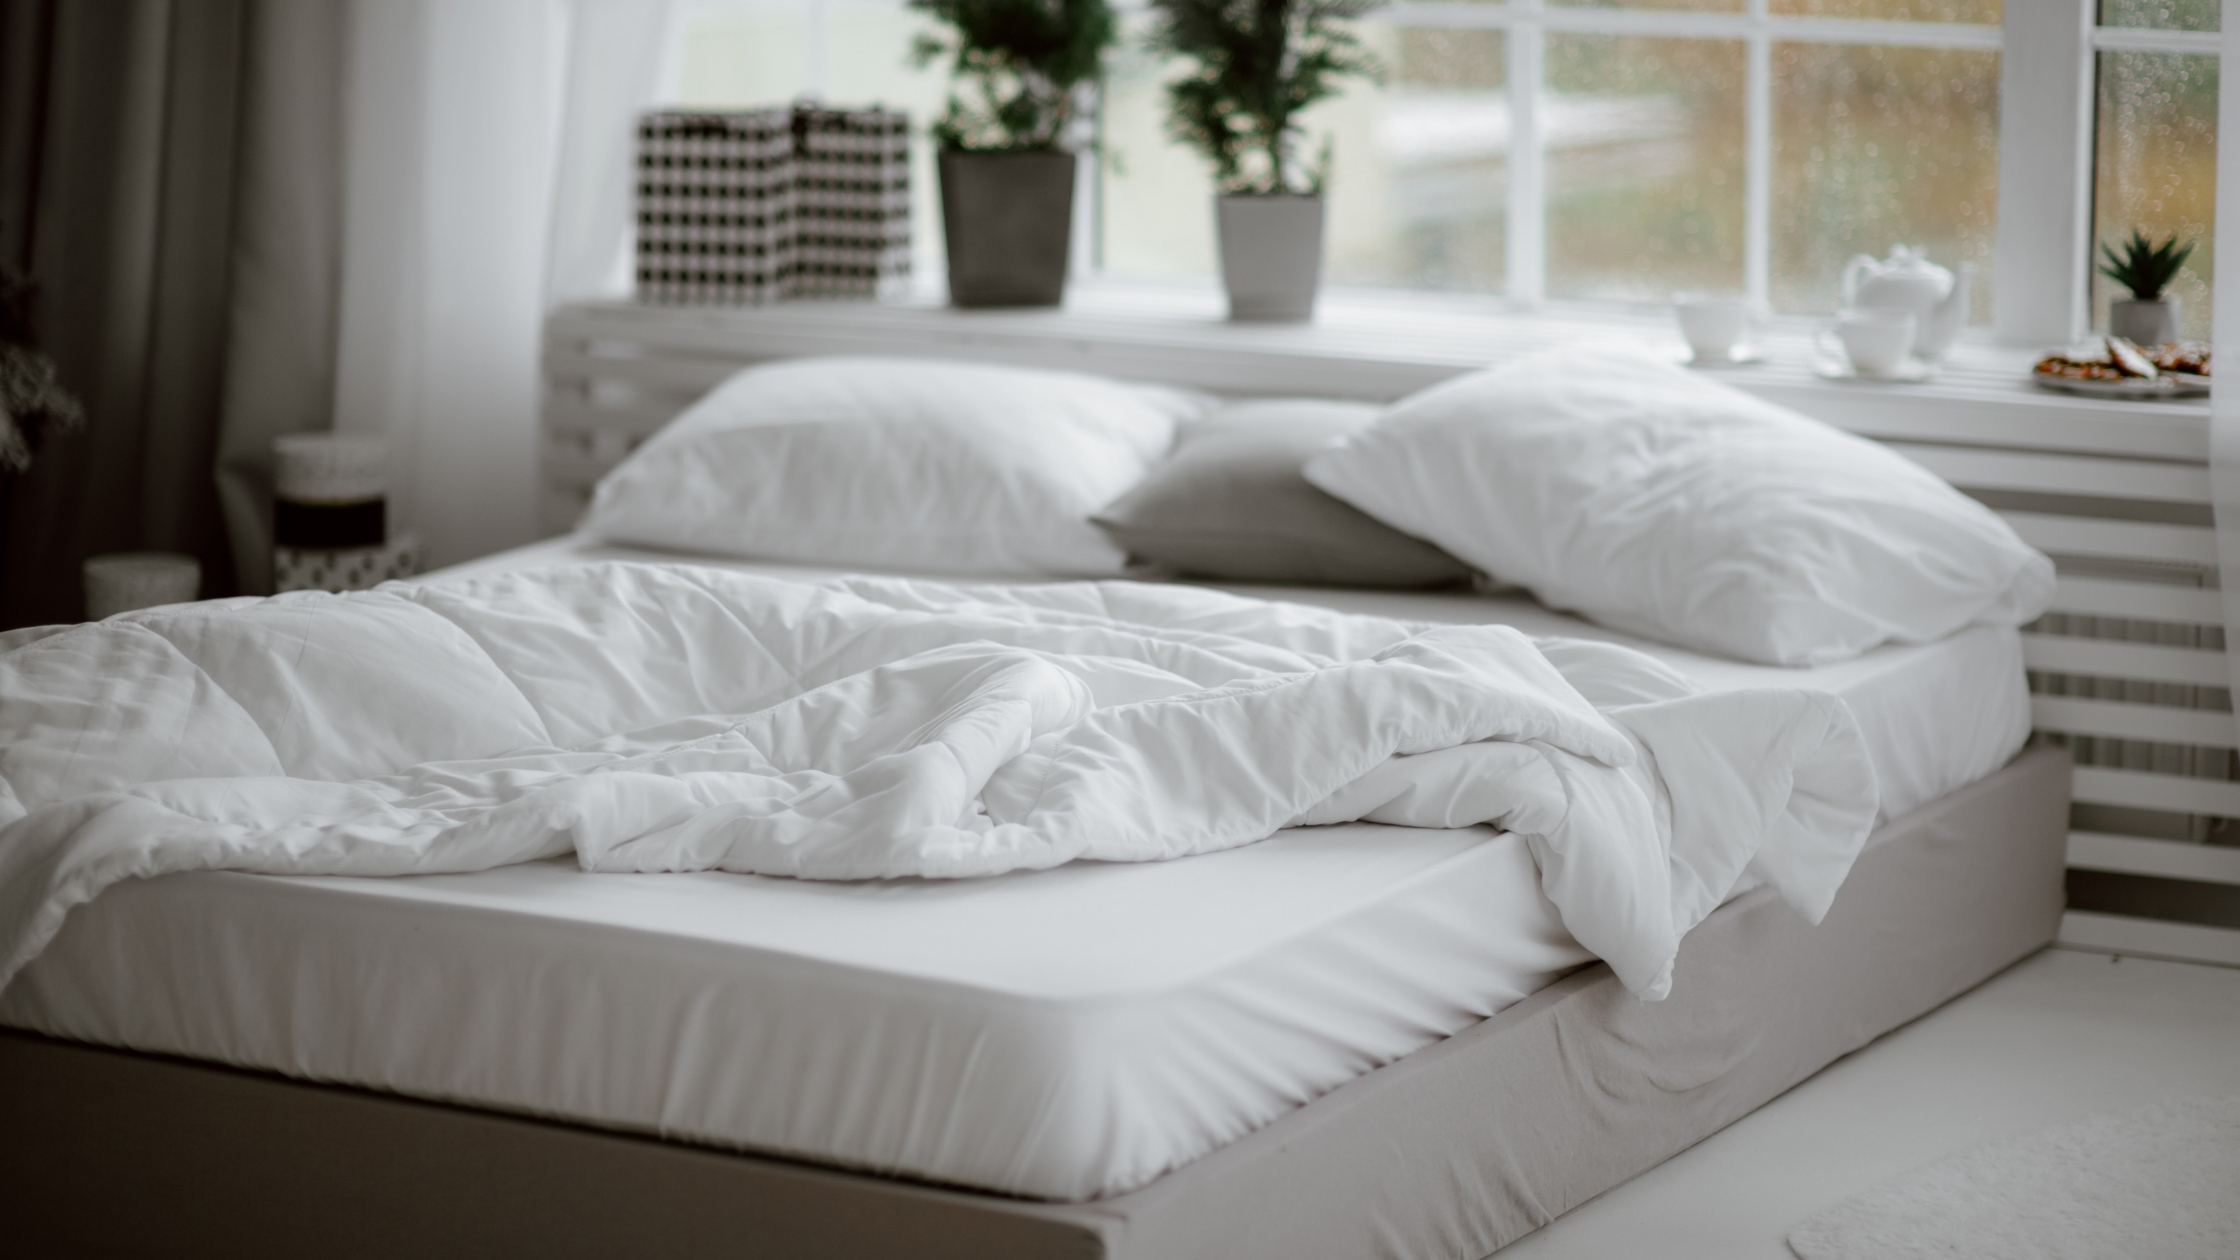 Mattress Pad With A Difference - Sleep Health - Snugsleep